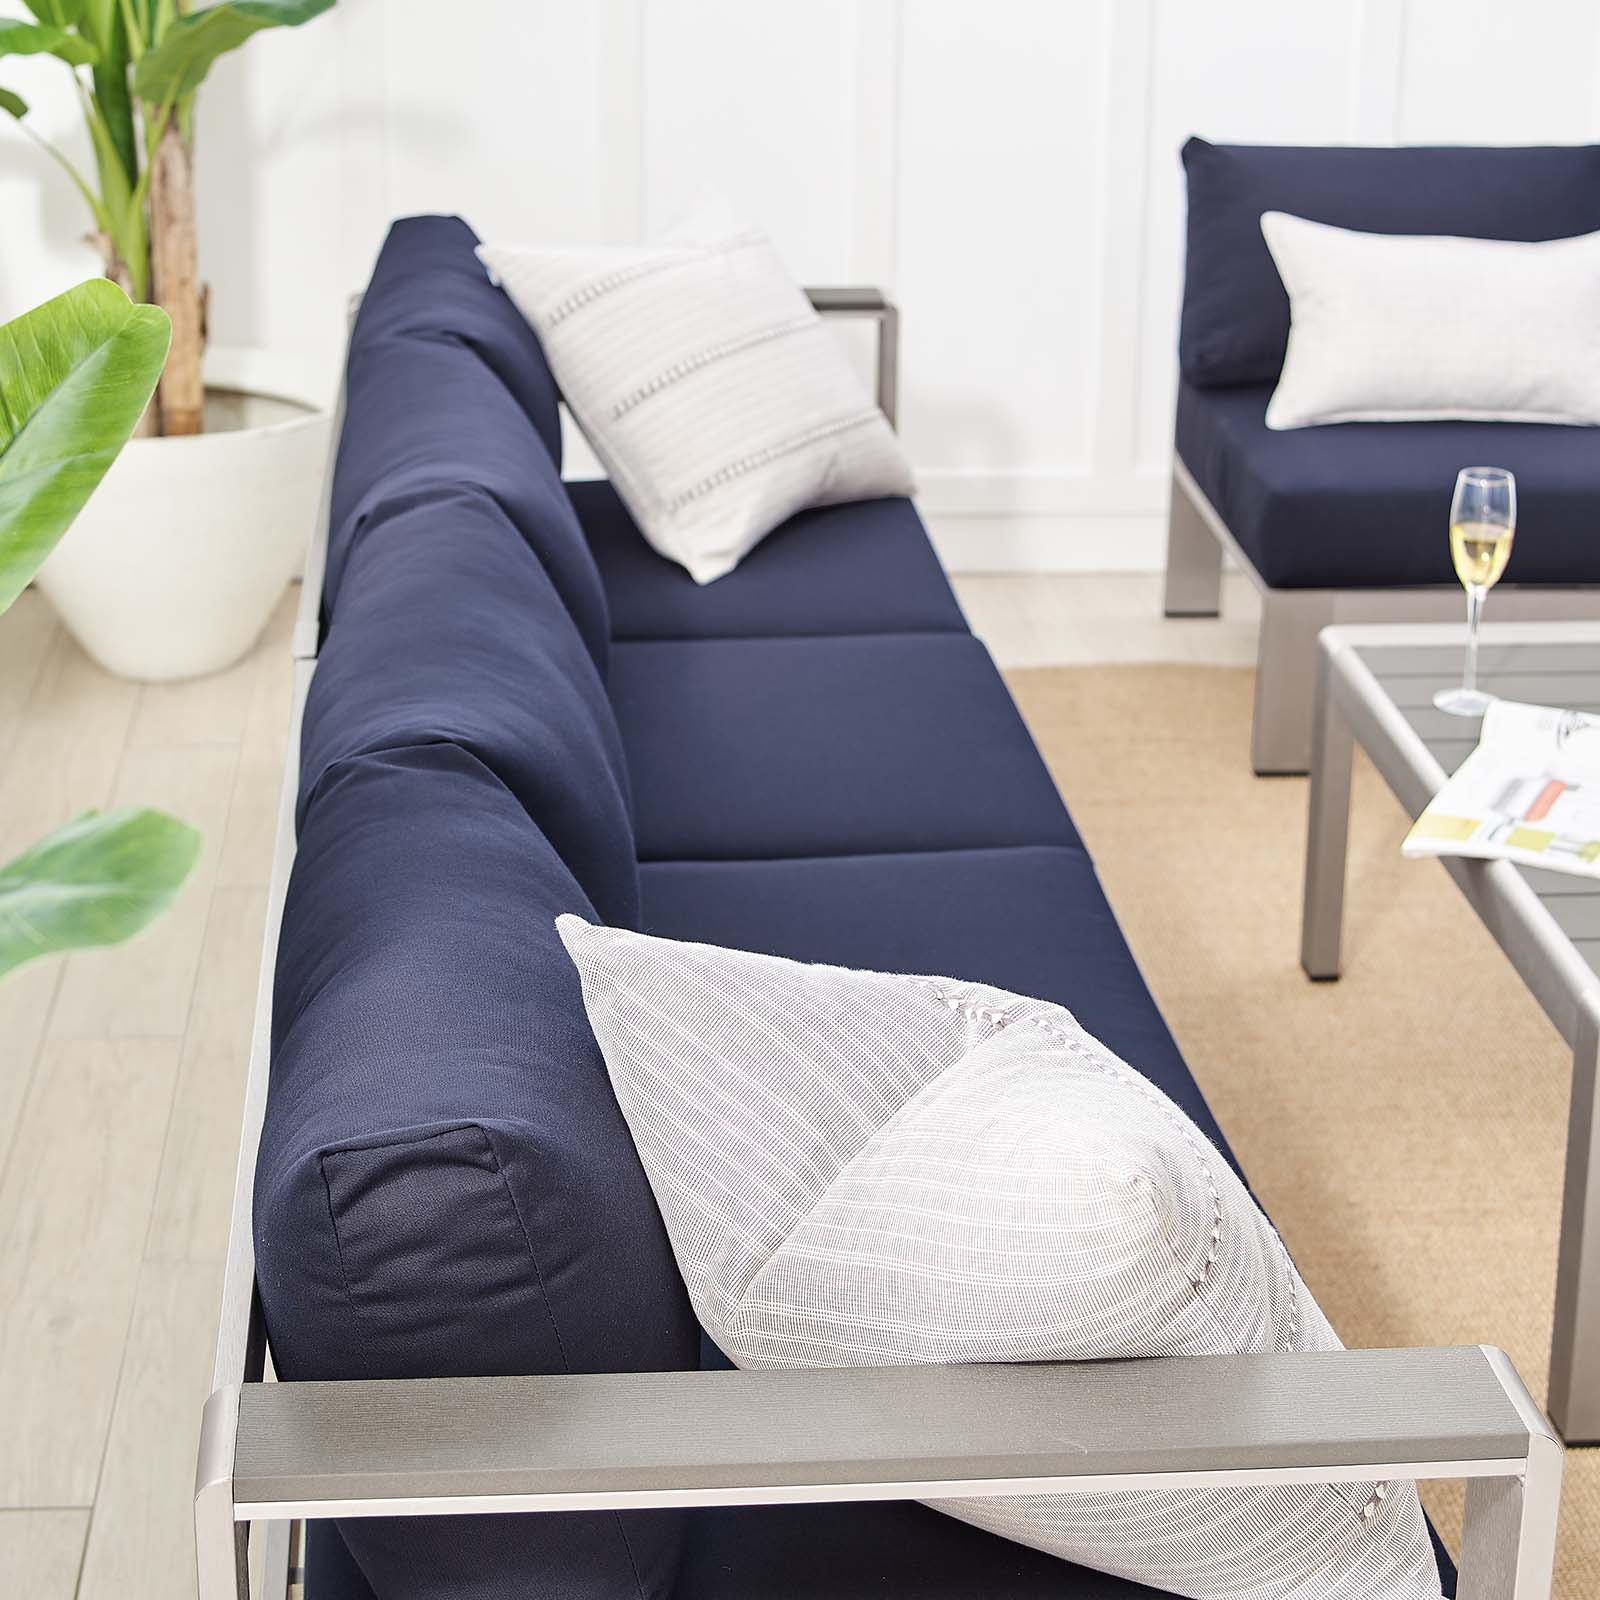 Shore Sunbrella® Fabric Outdoor Patio Aluminum 5 Piece Sectional Sofa Set-Outdoor Set-Modway-Wall2Wall Furnishings